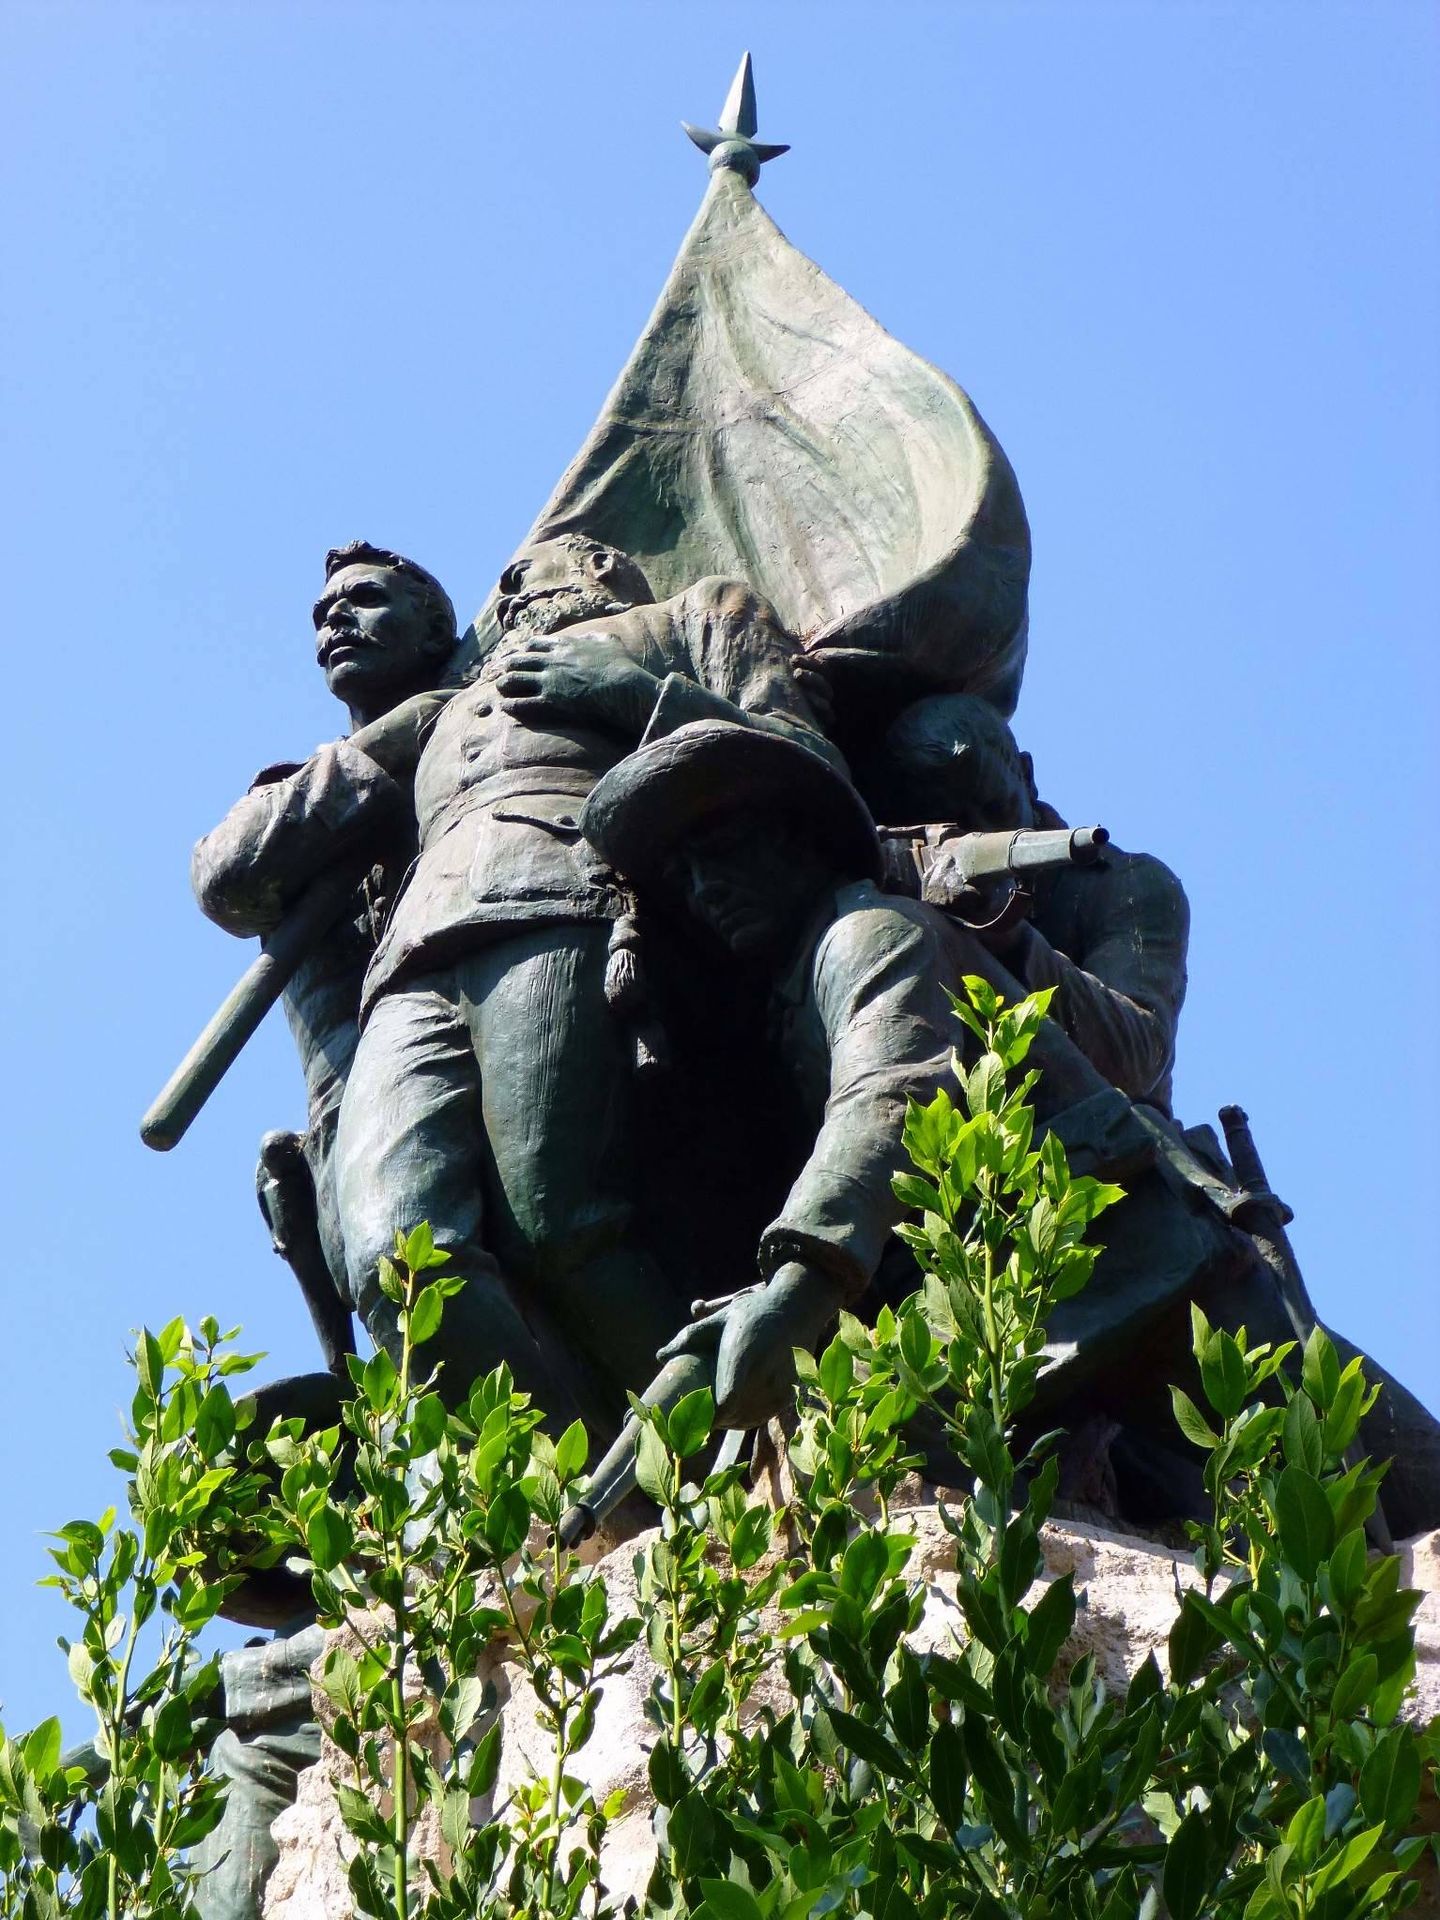 Monumento al general Vara del Rey en Madrid. (Wikimedia Commons)